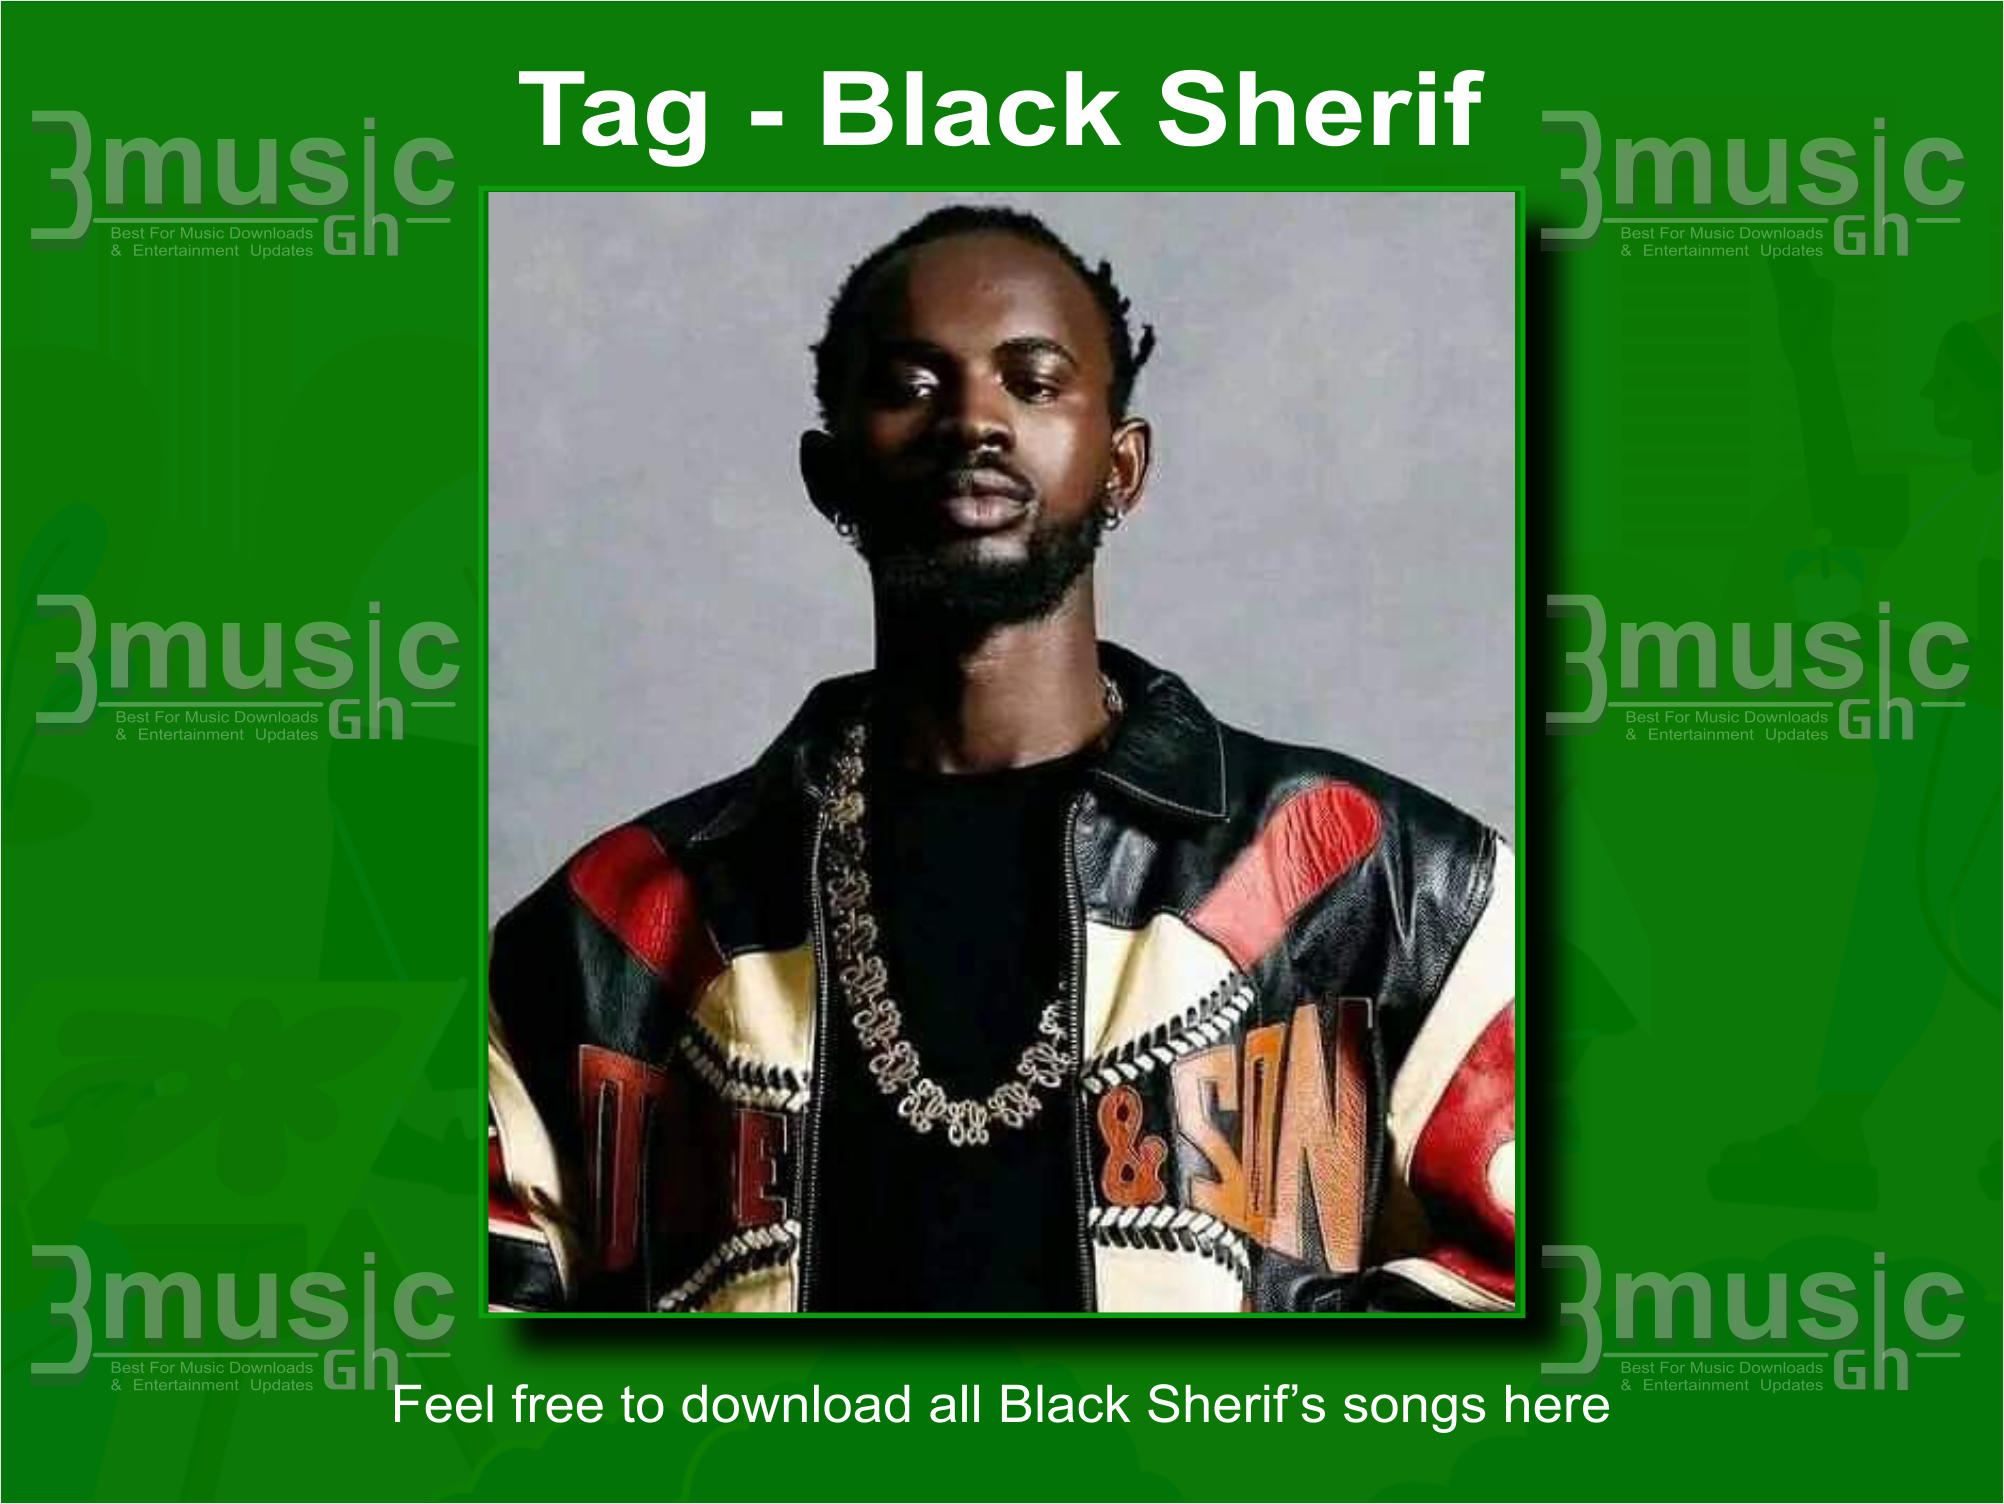 Black Sherif songs all download_ 3musicgh.com